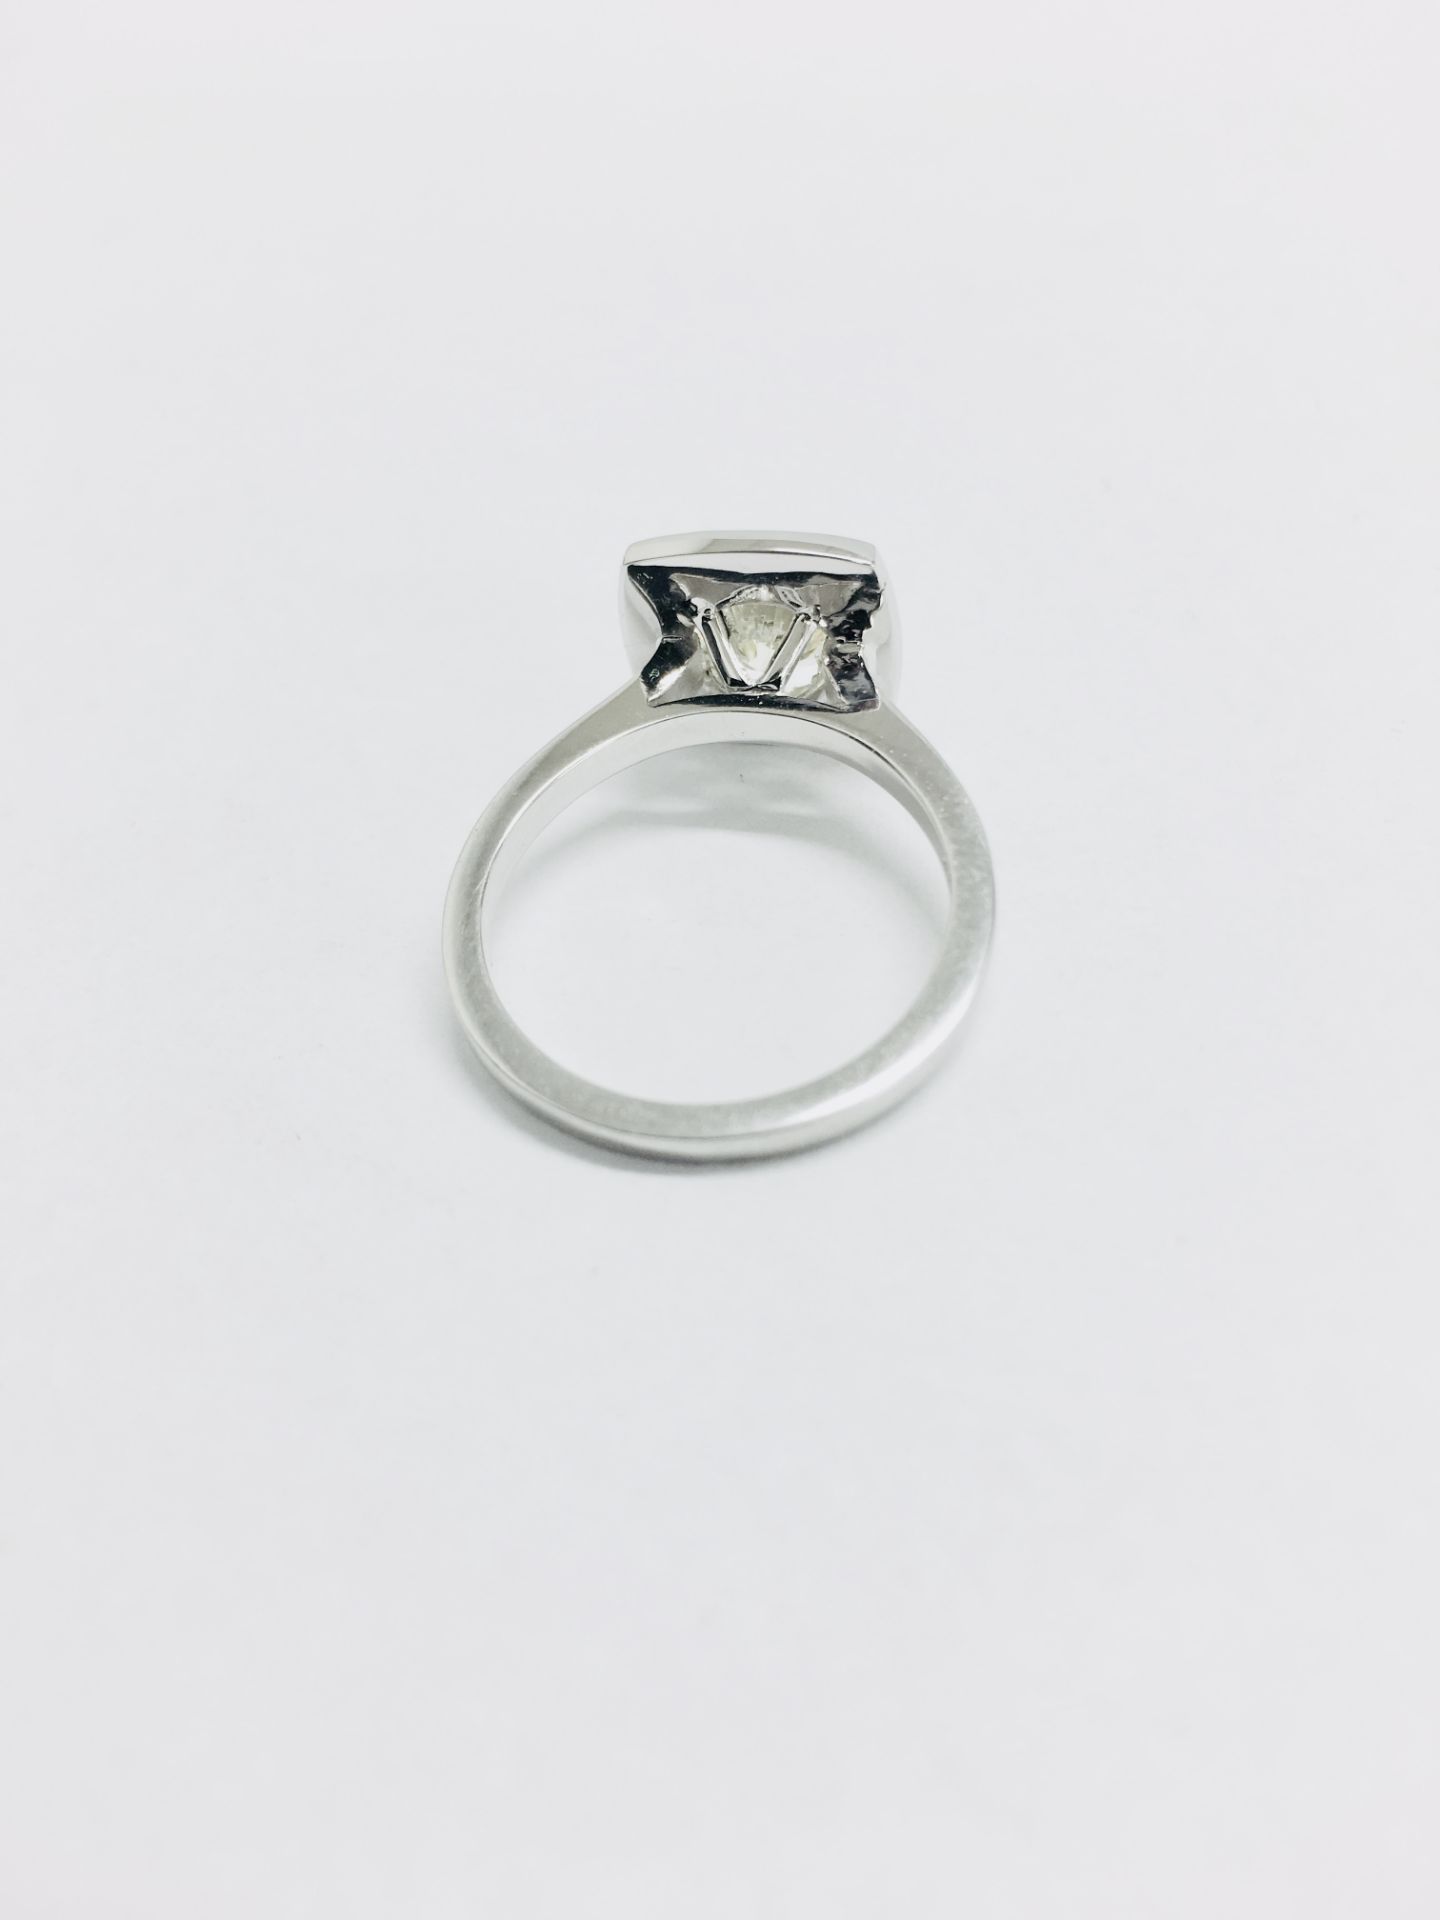 18ct white gold Handmade Halo style ring,0.50ct vvs1 grade g colour diamond,18ct white gold settig - Image 5 of 6